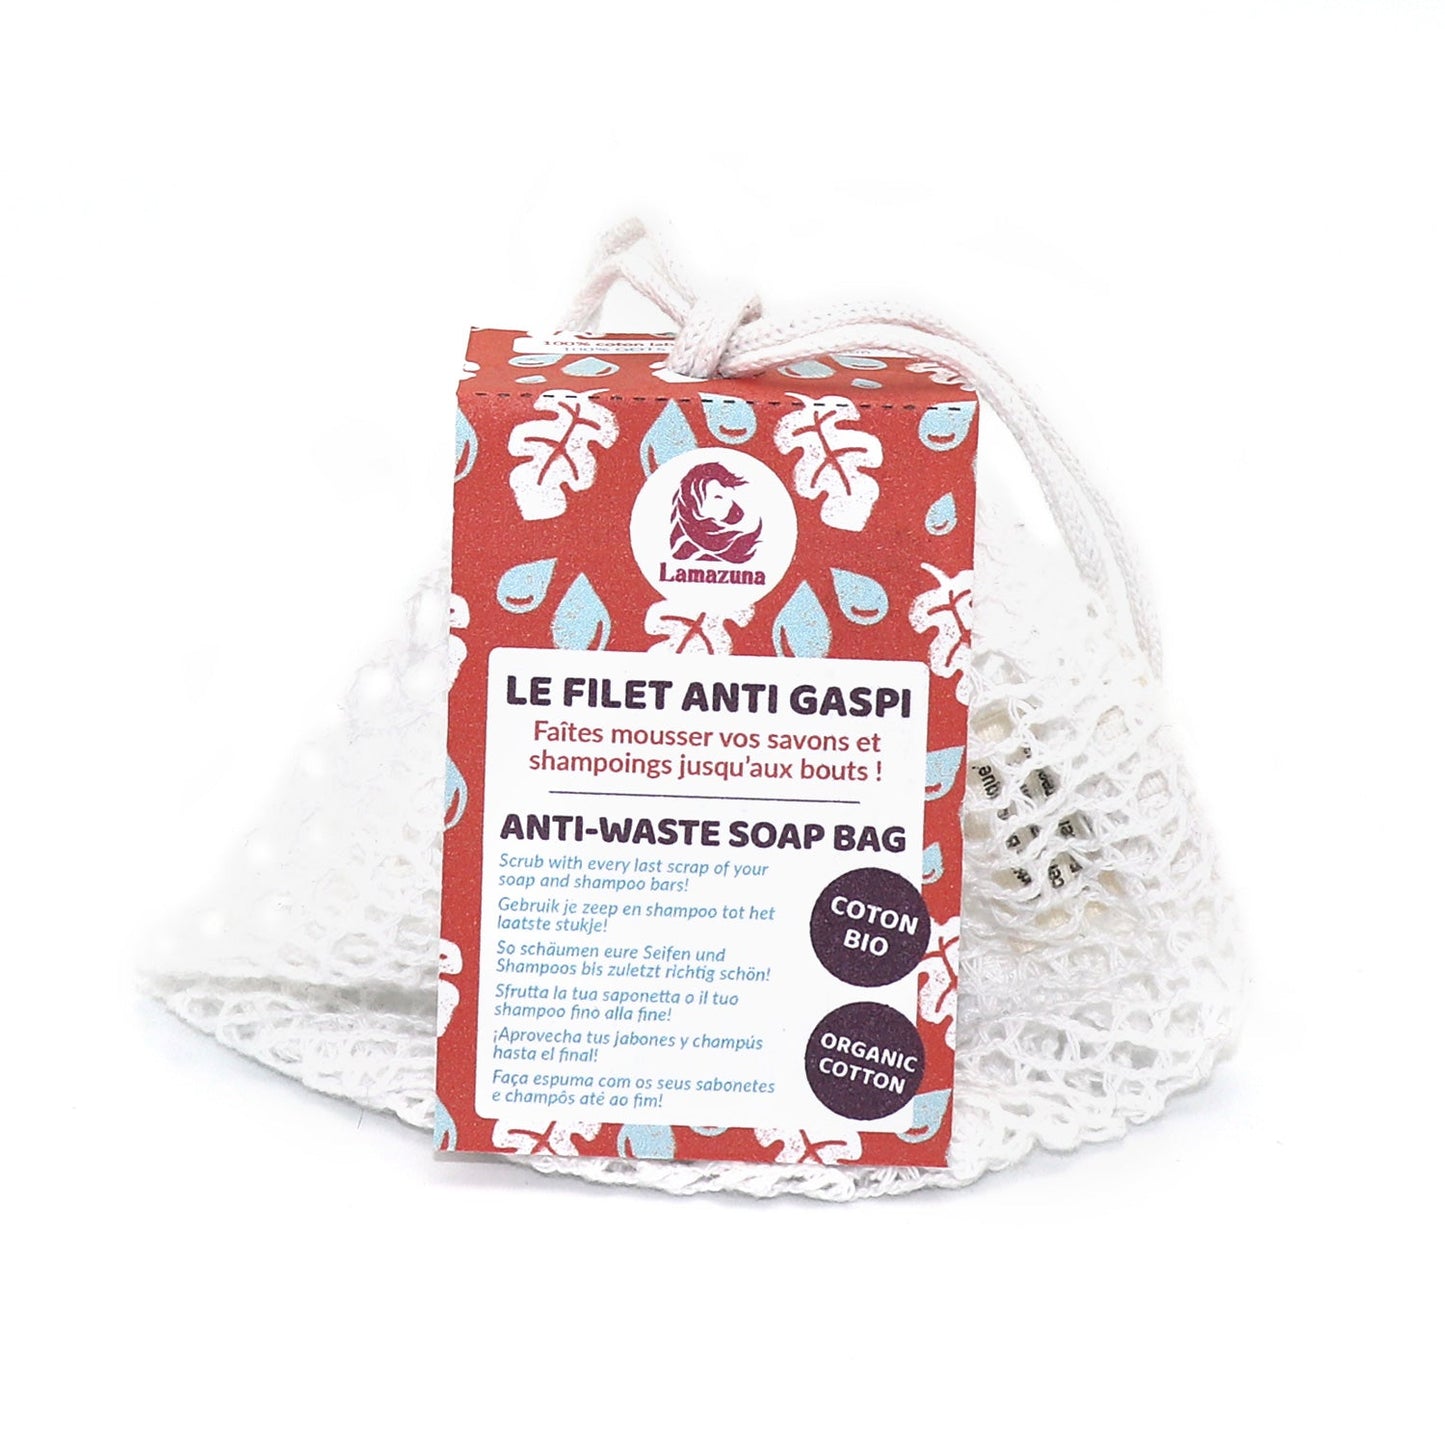 Lamazuna -- Filet anti gaspi pour chutes de savons